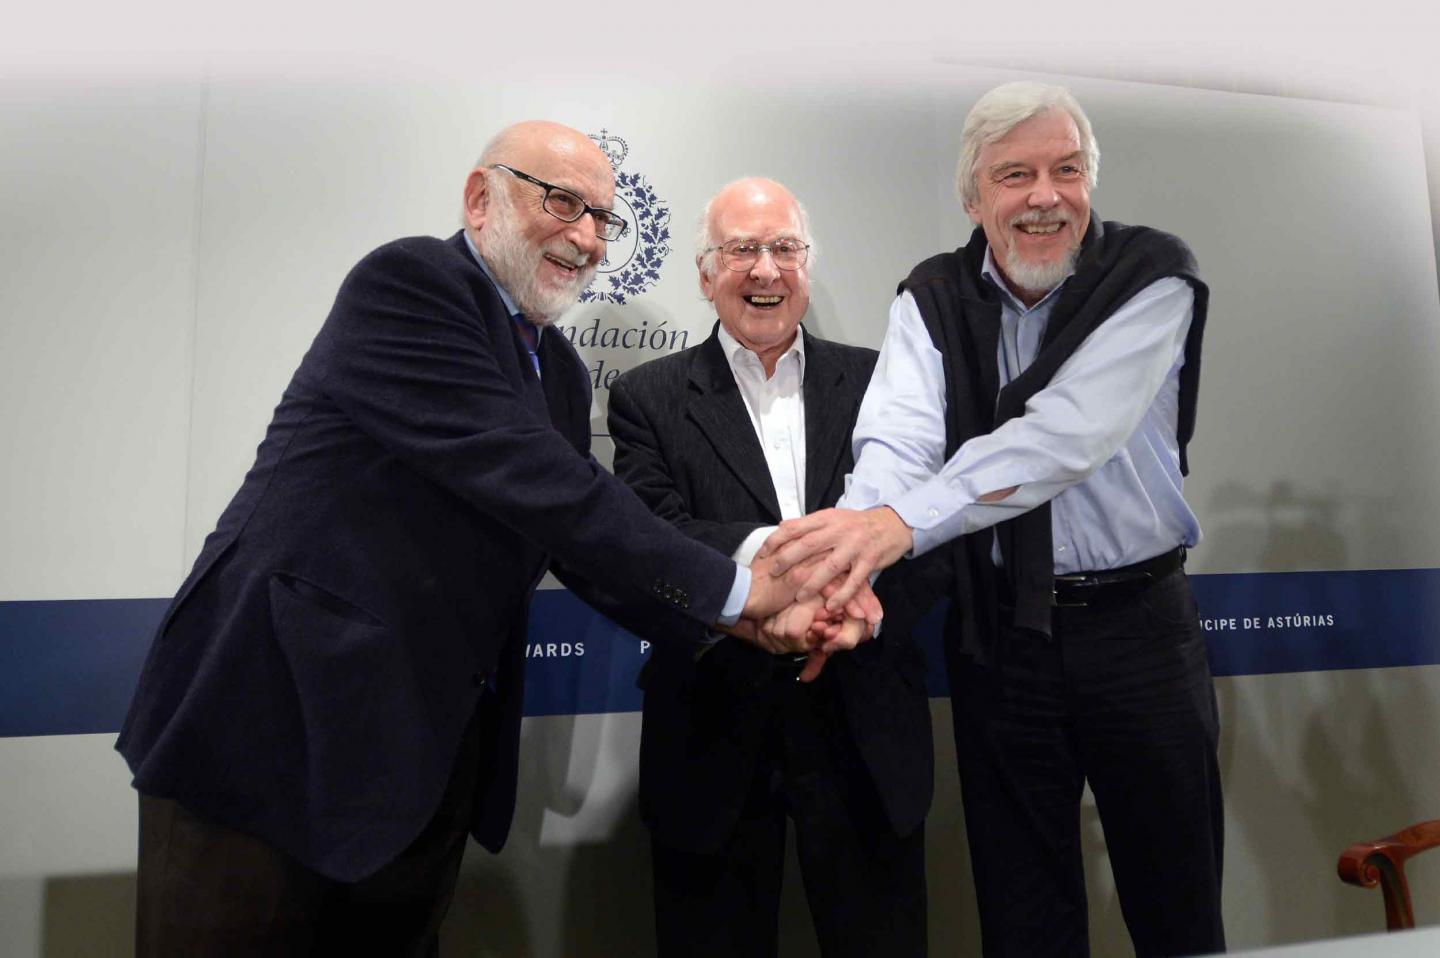 CERN receives the Prince of Asturias Award